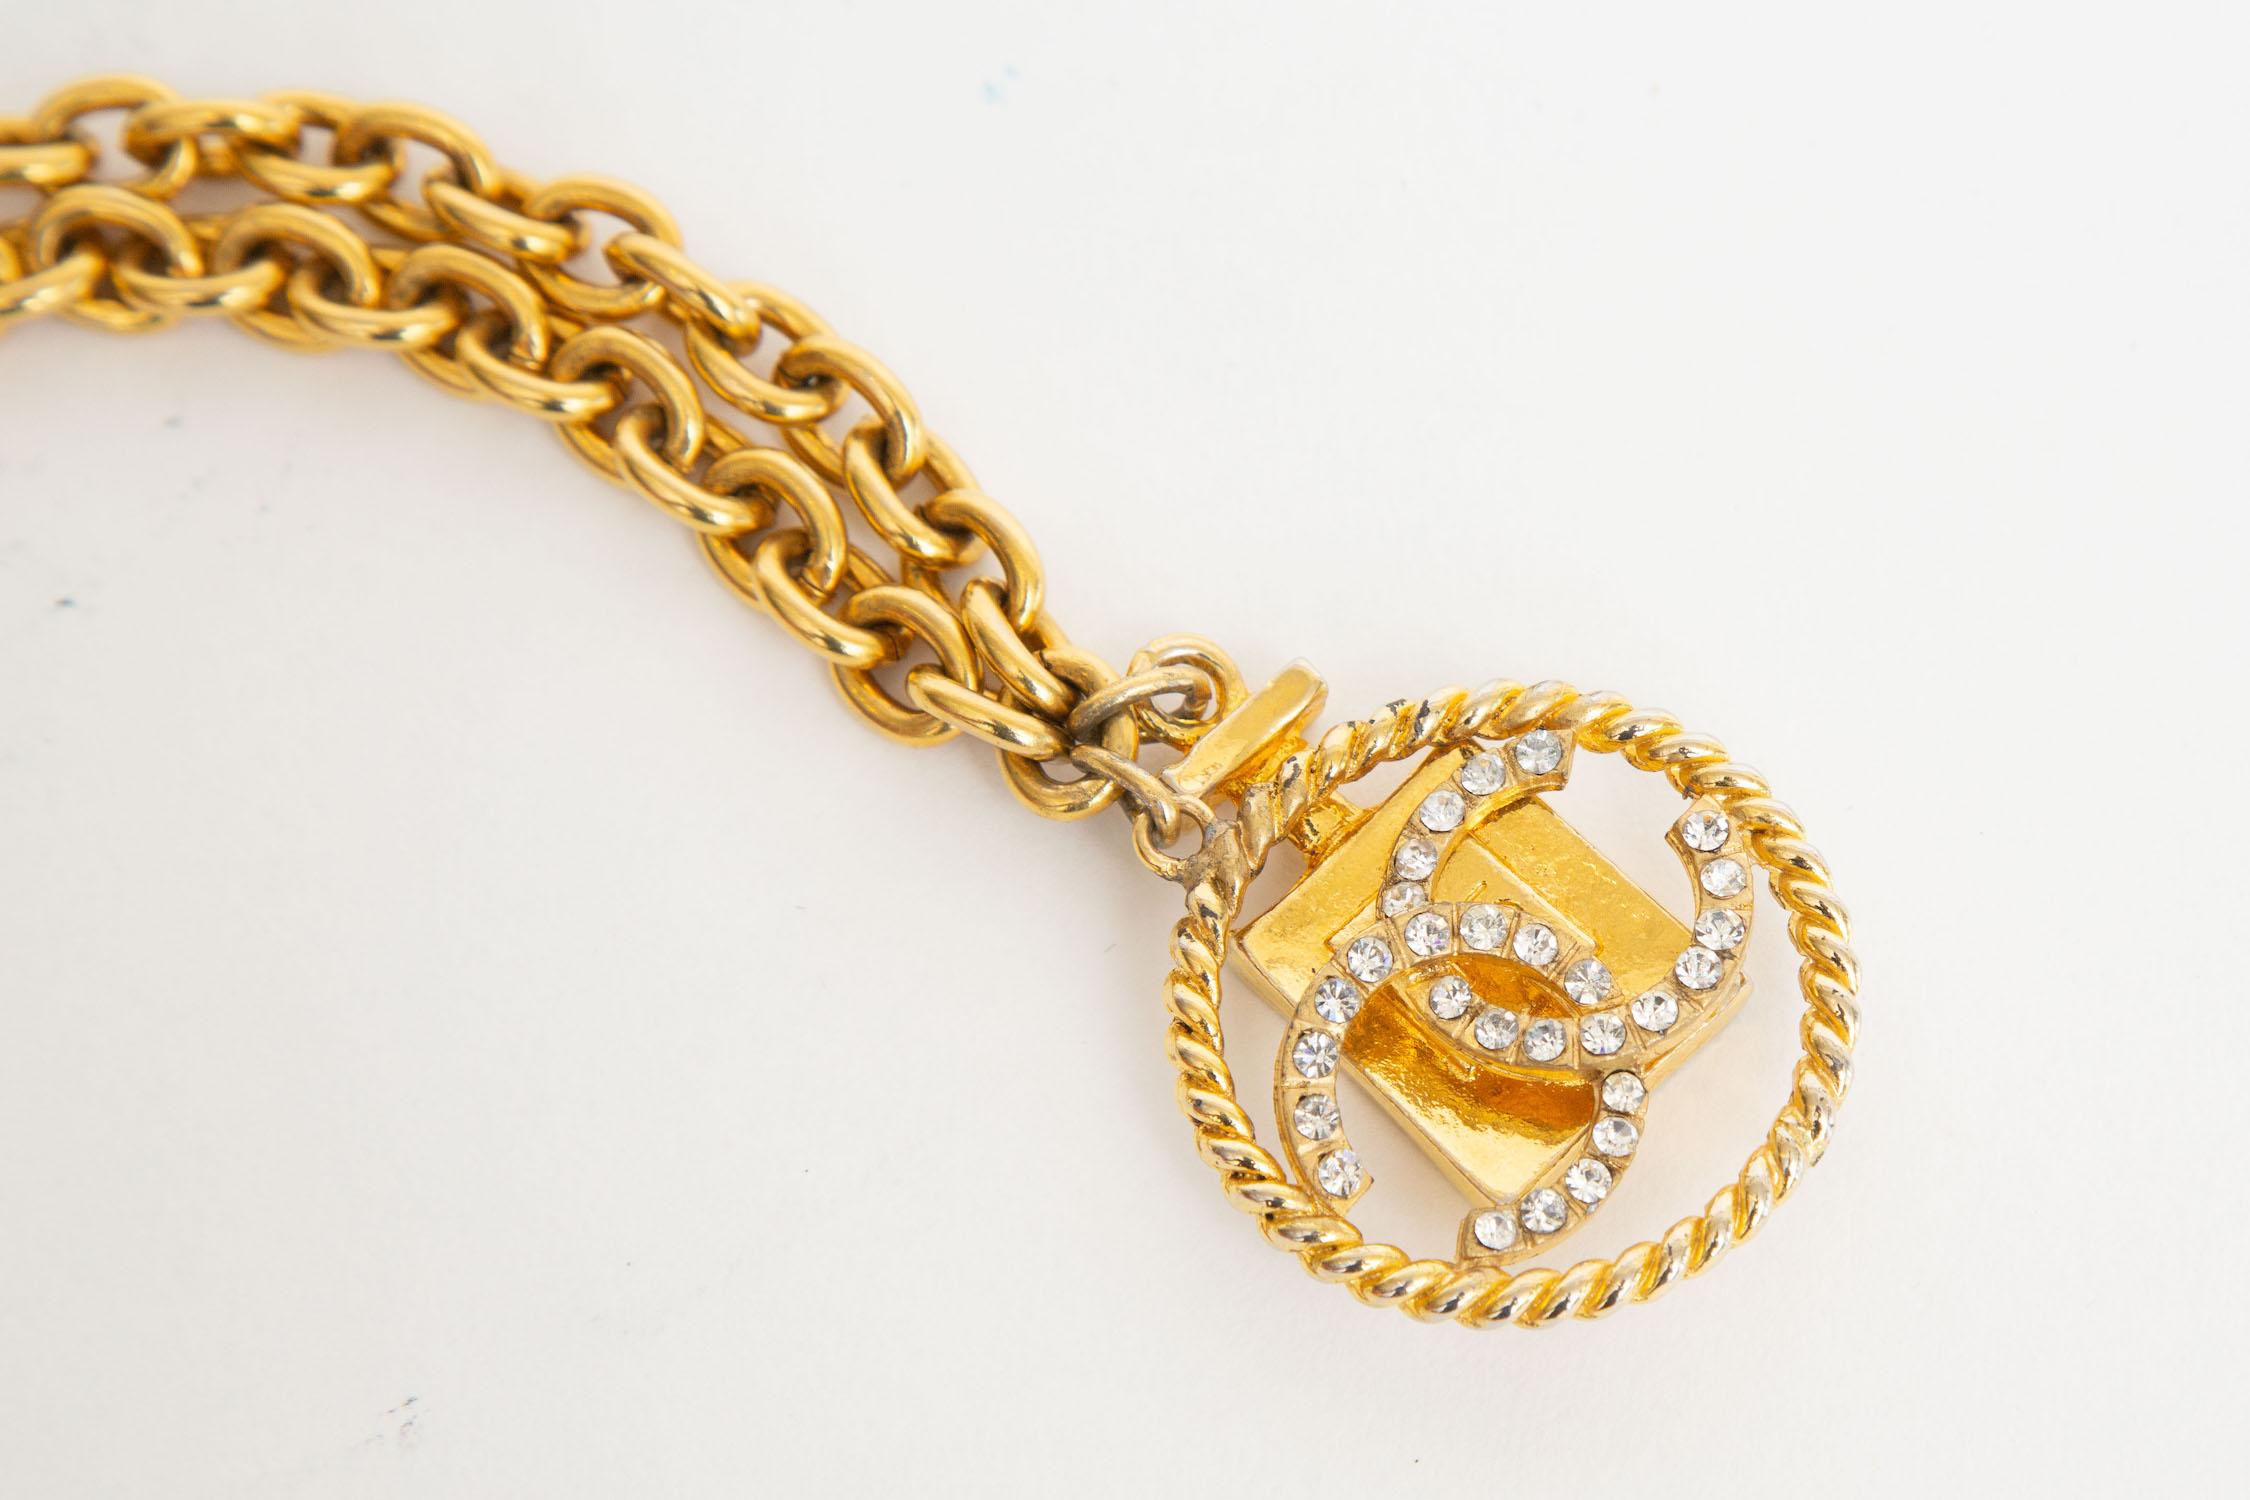 chanel rhinestone necklace